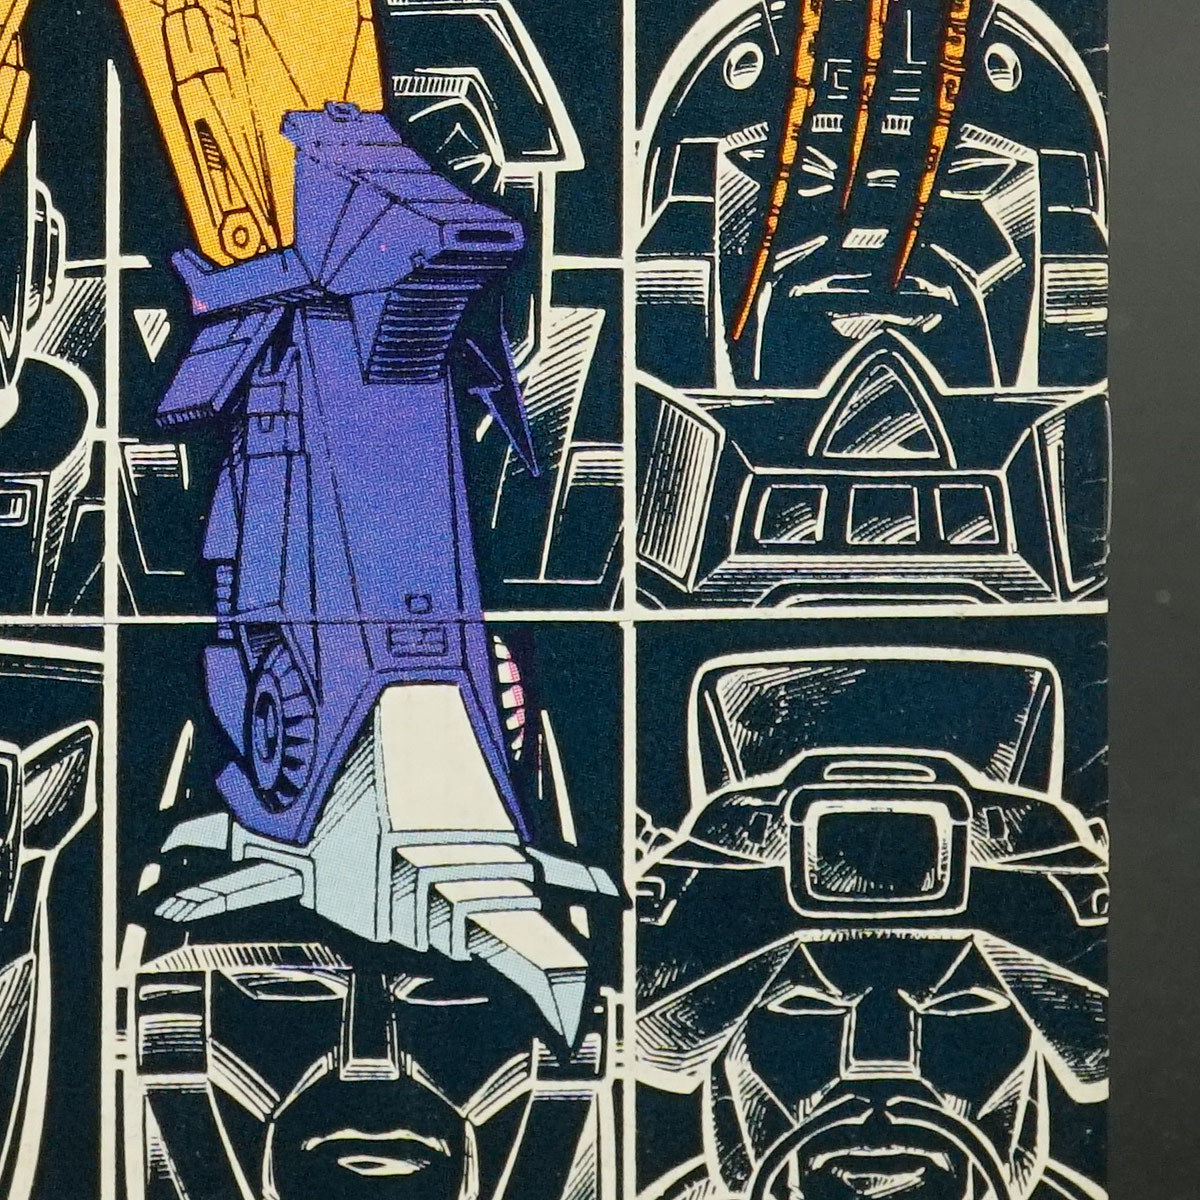 TRANSFORMERS UNIVERSE #4 Marvel Comics 1987 (CA) Trimpe (W) Budiansky 230926W